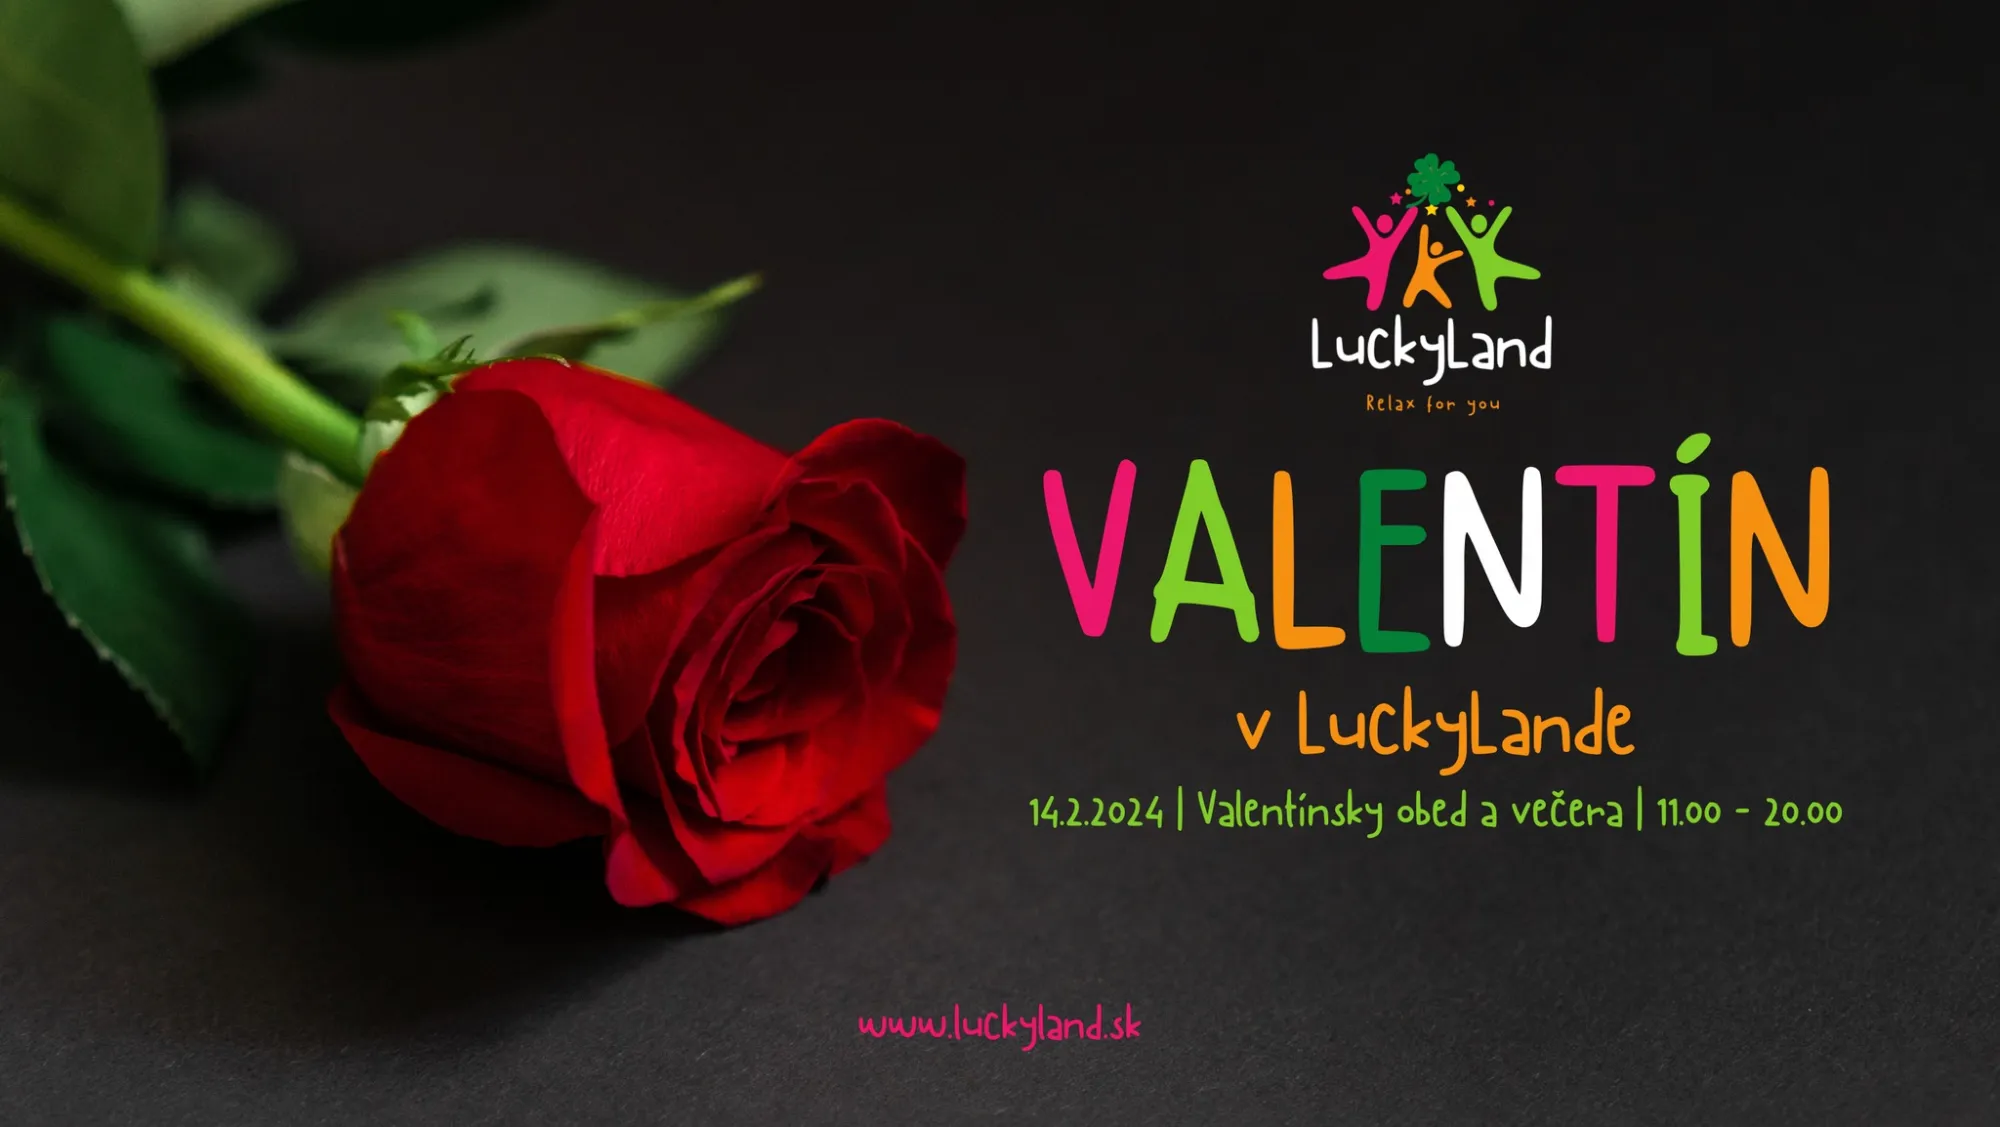 Valentín v LuckyLande